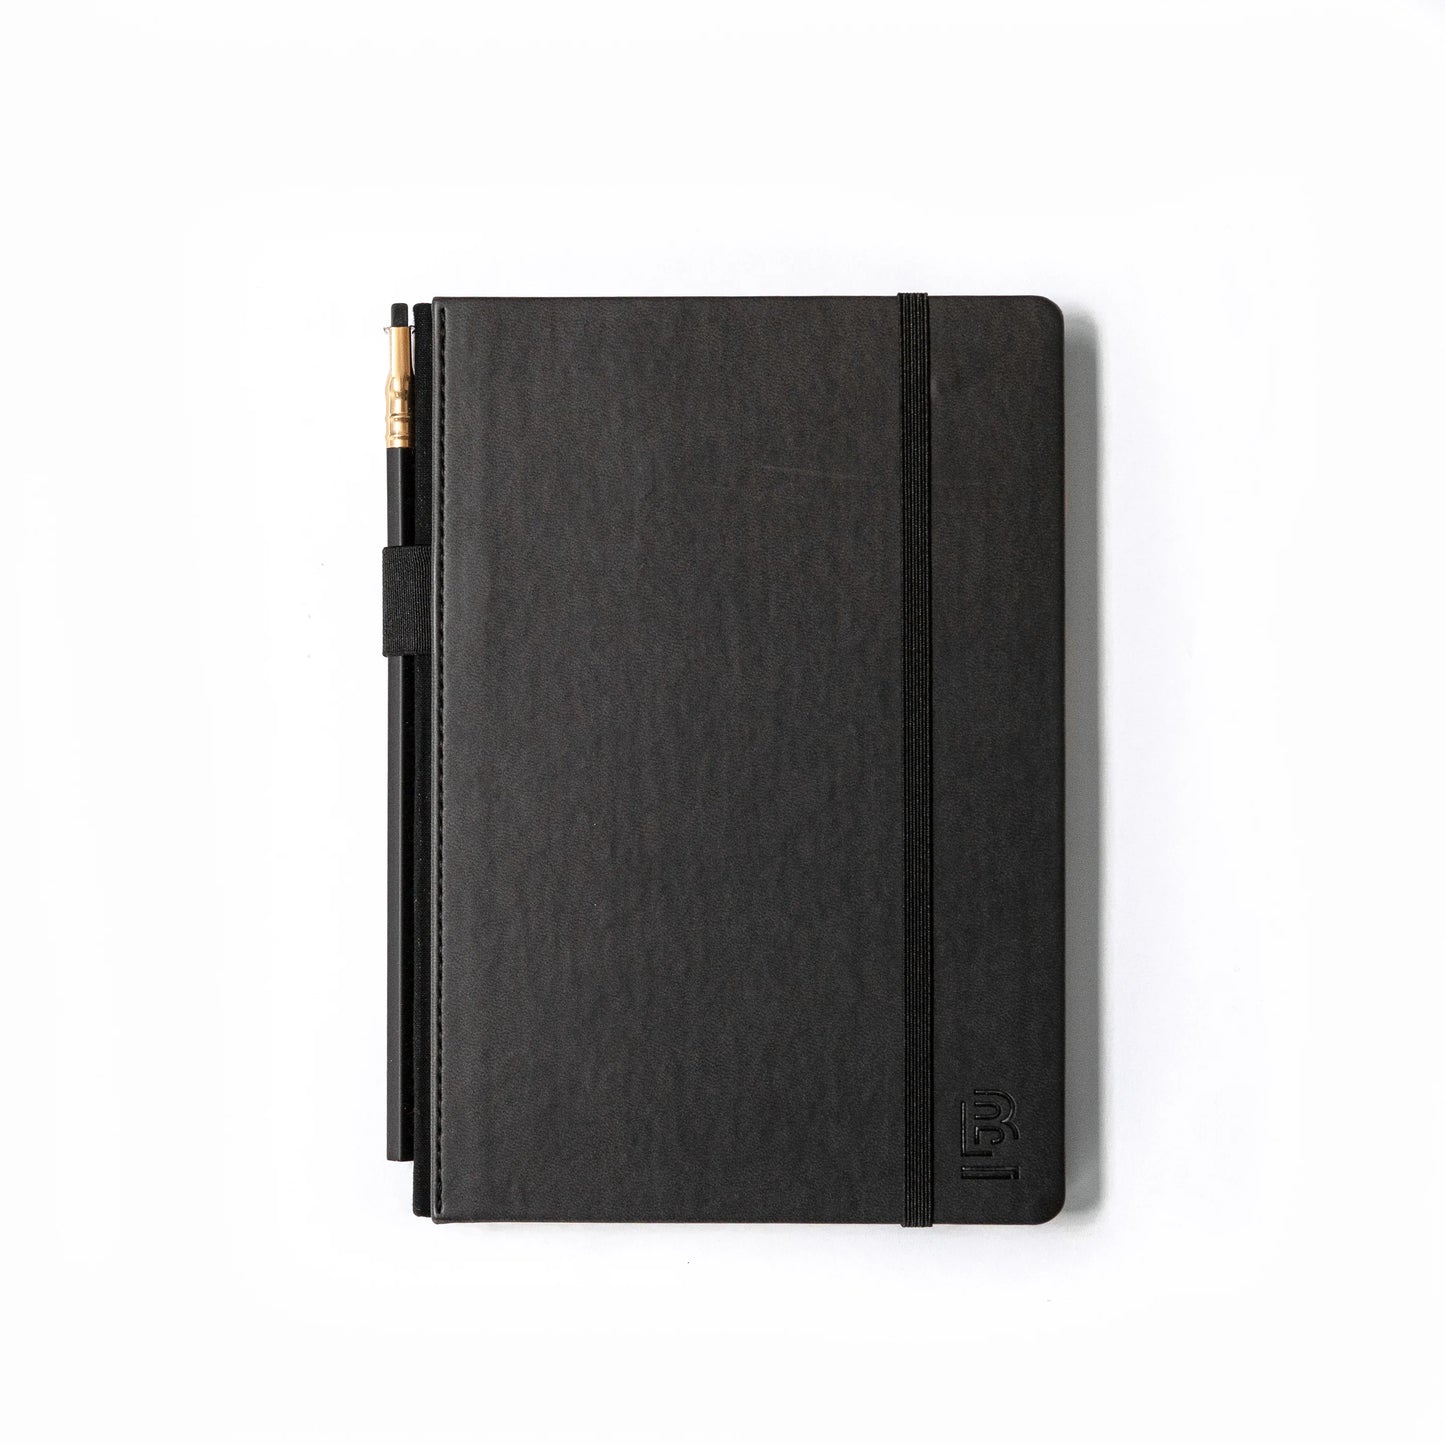 Blackwing - White Slate Notebook (Dot Grid)